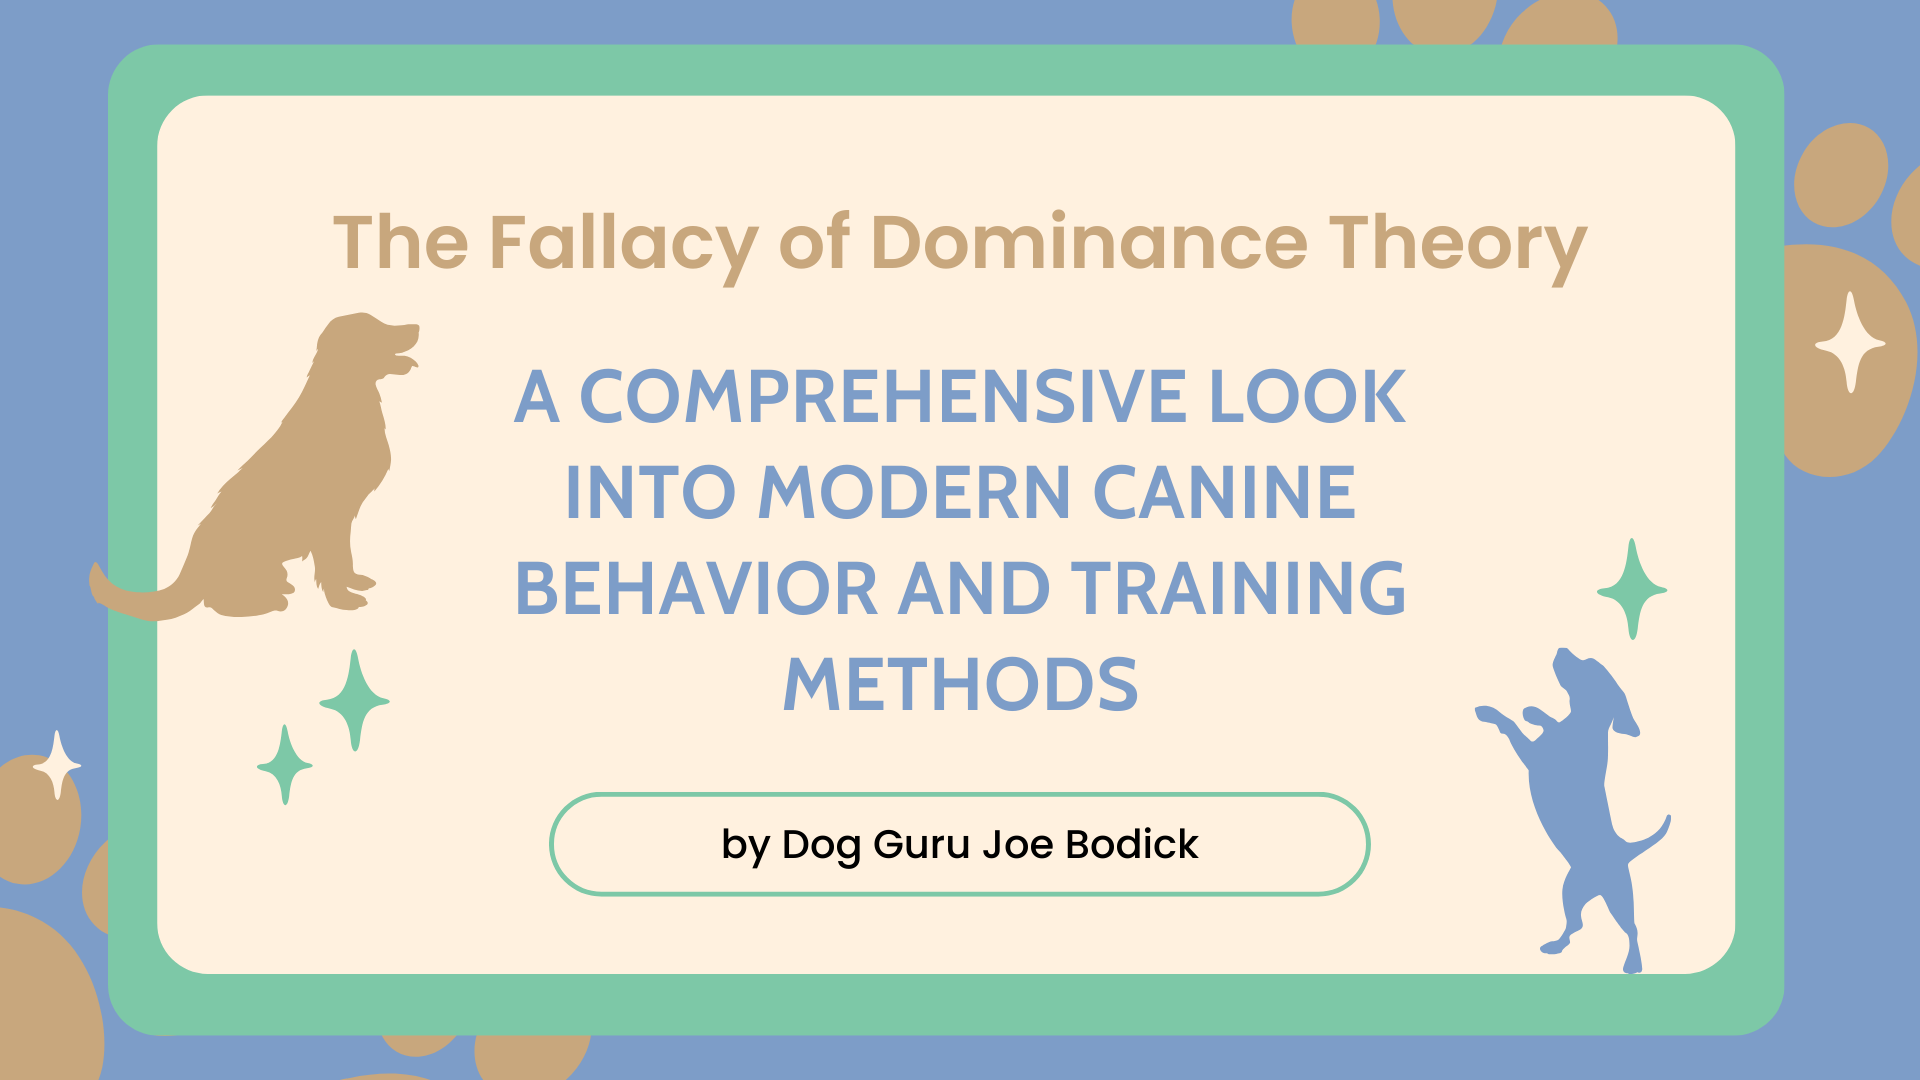 A Comprehensive Look into Modern Canine Behavior and Training Methods. by Dog Guru Joe Bodick